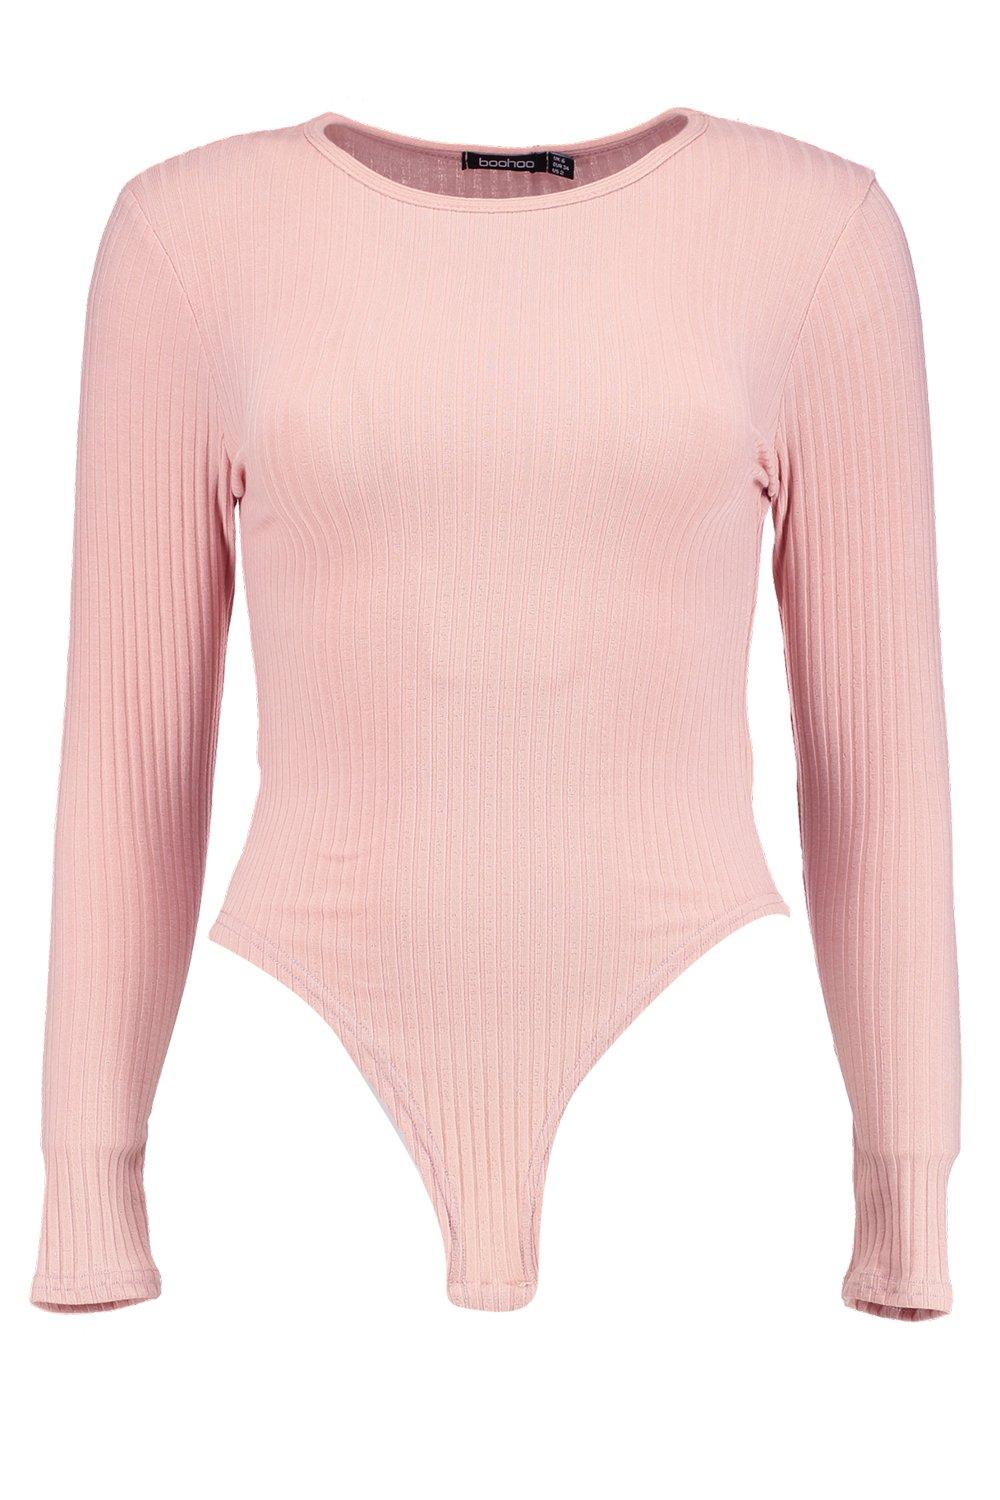 Pink Color Block Bodysuit - Ribbed Knit Top - Scoop Neck Bodysuit